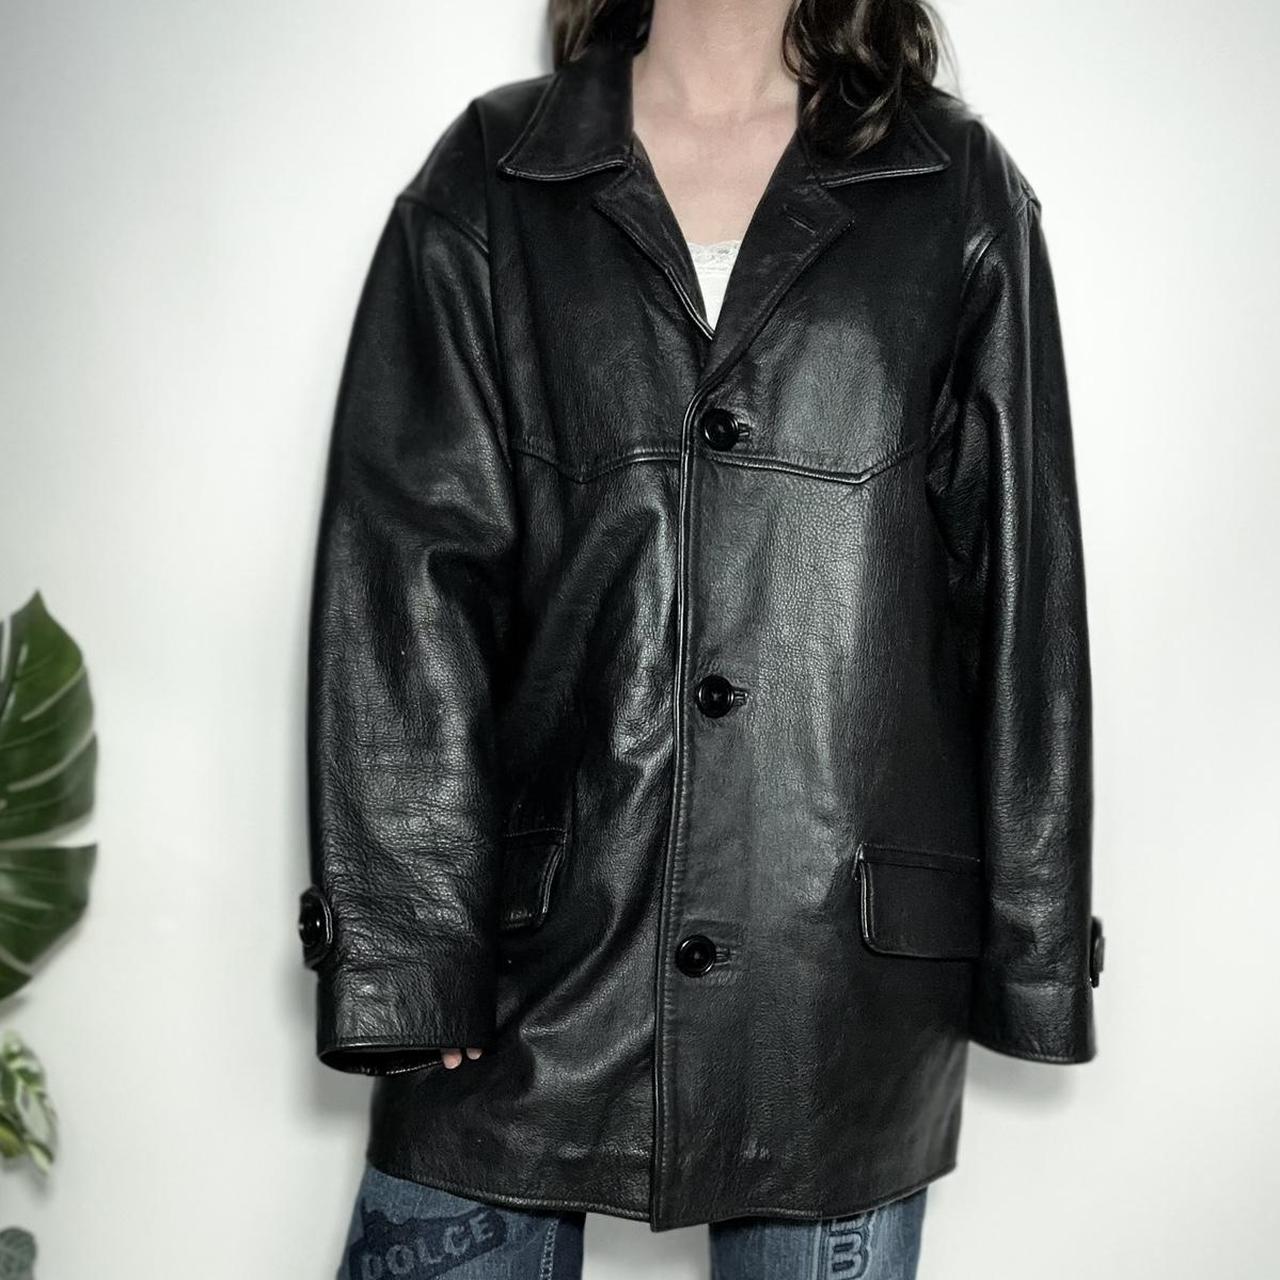 Vintage 90s black oversized leather blazer jacket